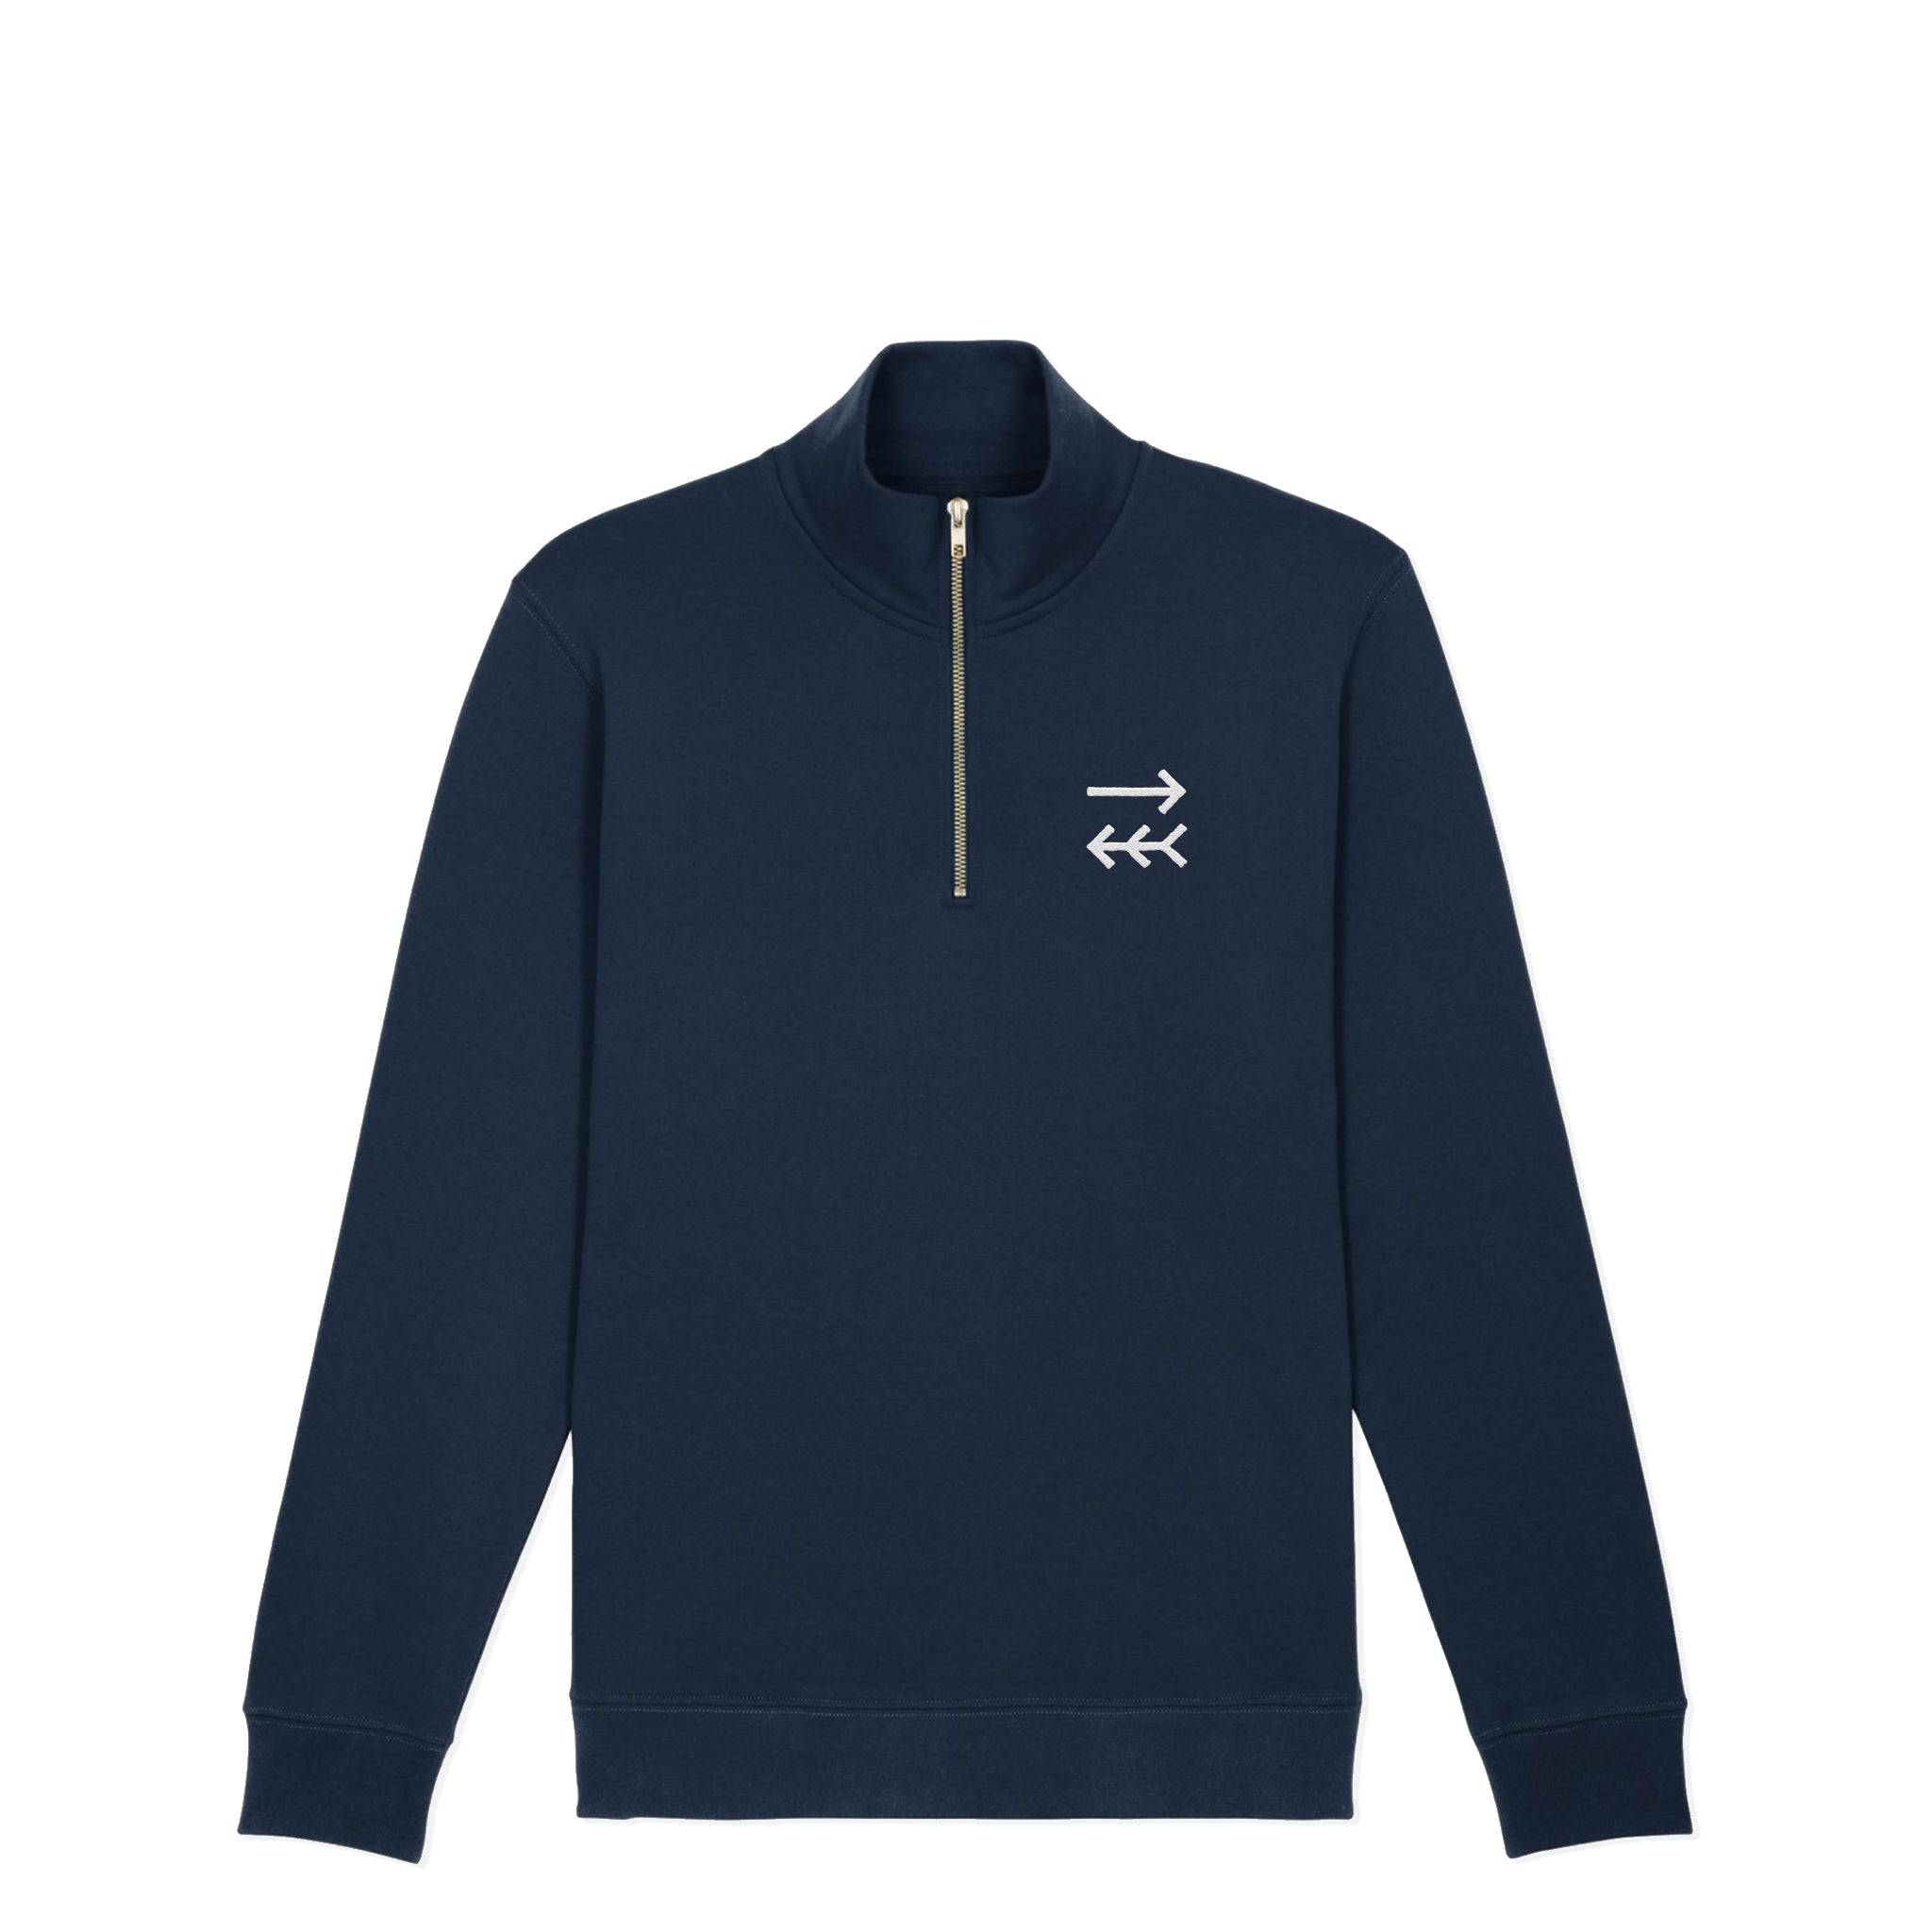 Tribe Core Navy Quarter Zip Sweatshirt - Organic Cotton - One Choice Apparel